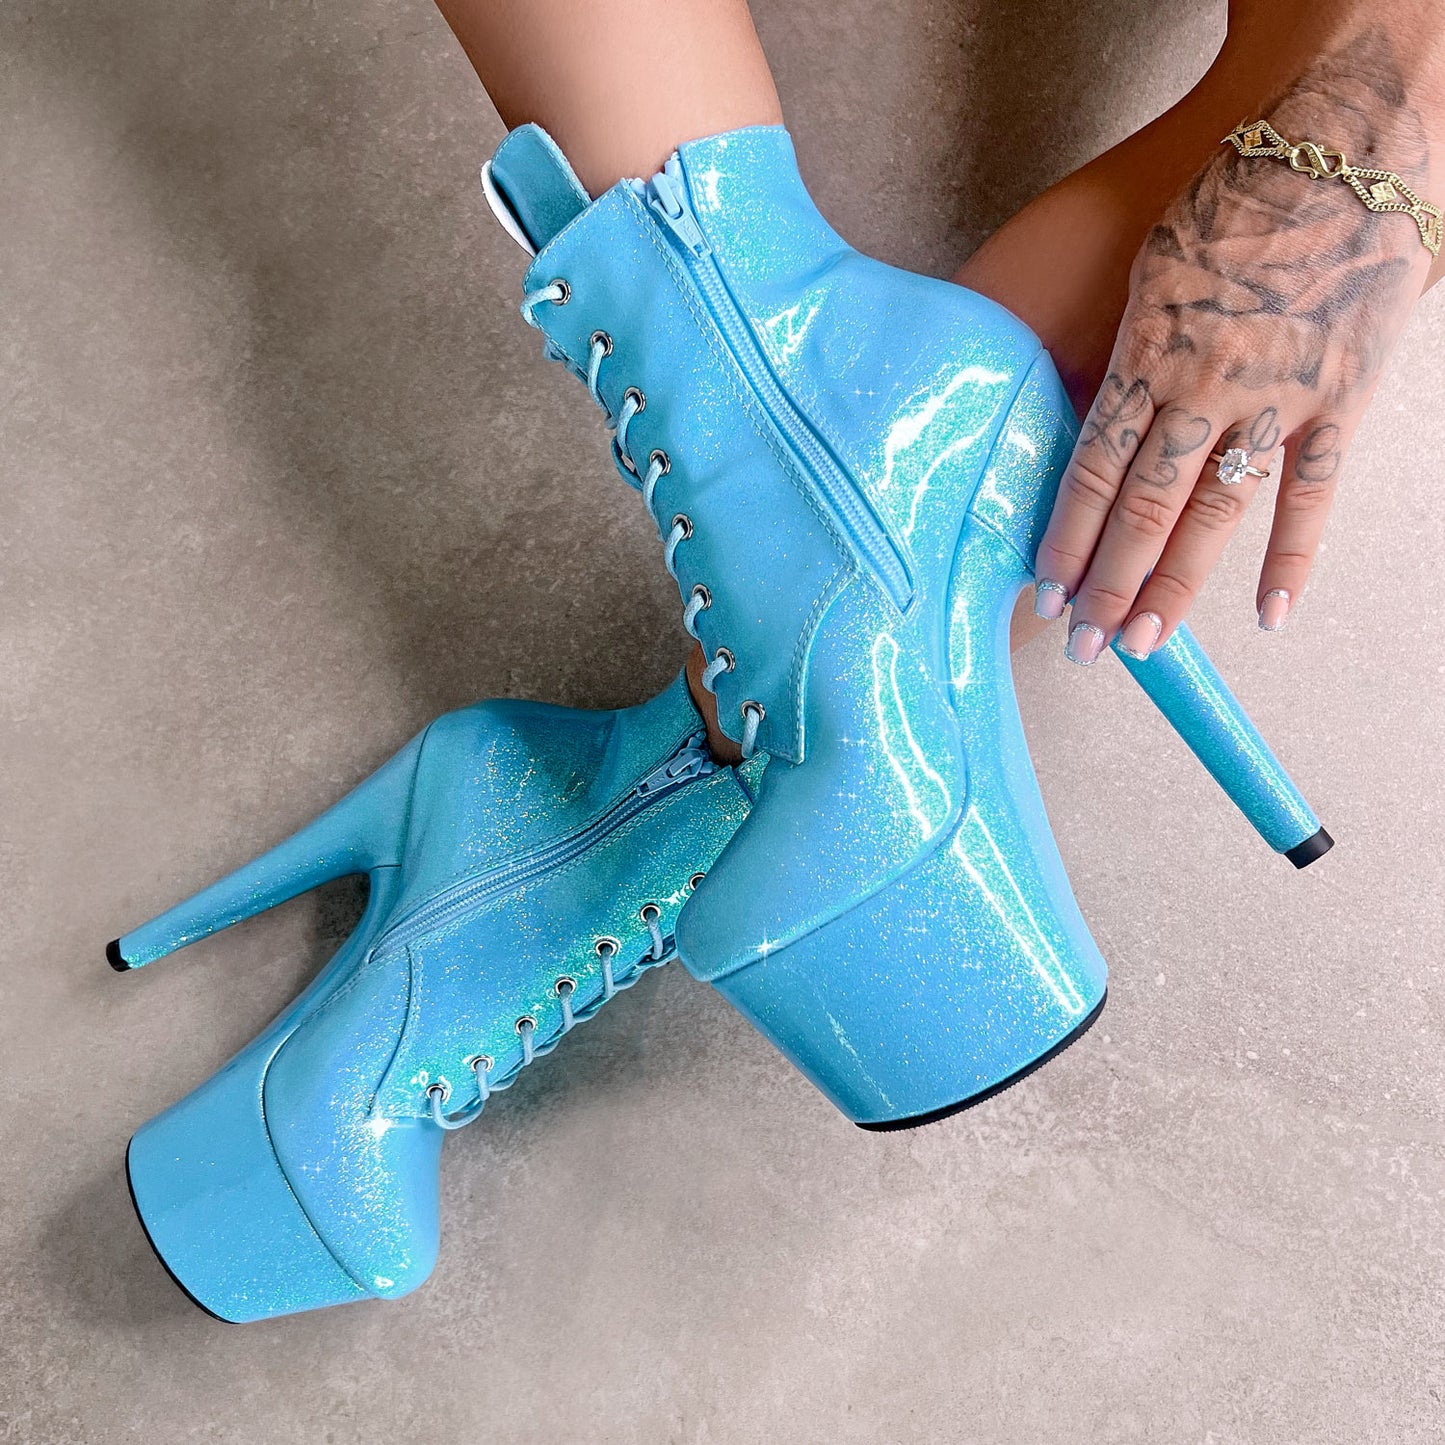 The Glitterati Ankle Boot - Baby Blues *2.0* - 7 INCH, stripper shoe, stripper heel, pole heel, not a pleaser, platform, dancer, pole dance, floor work